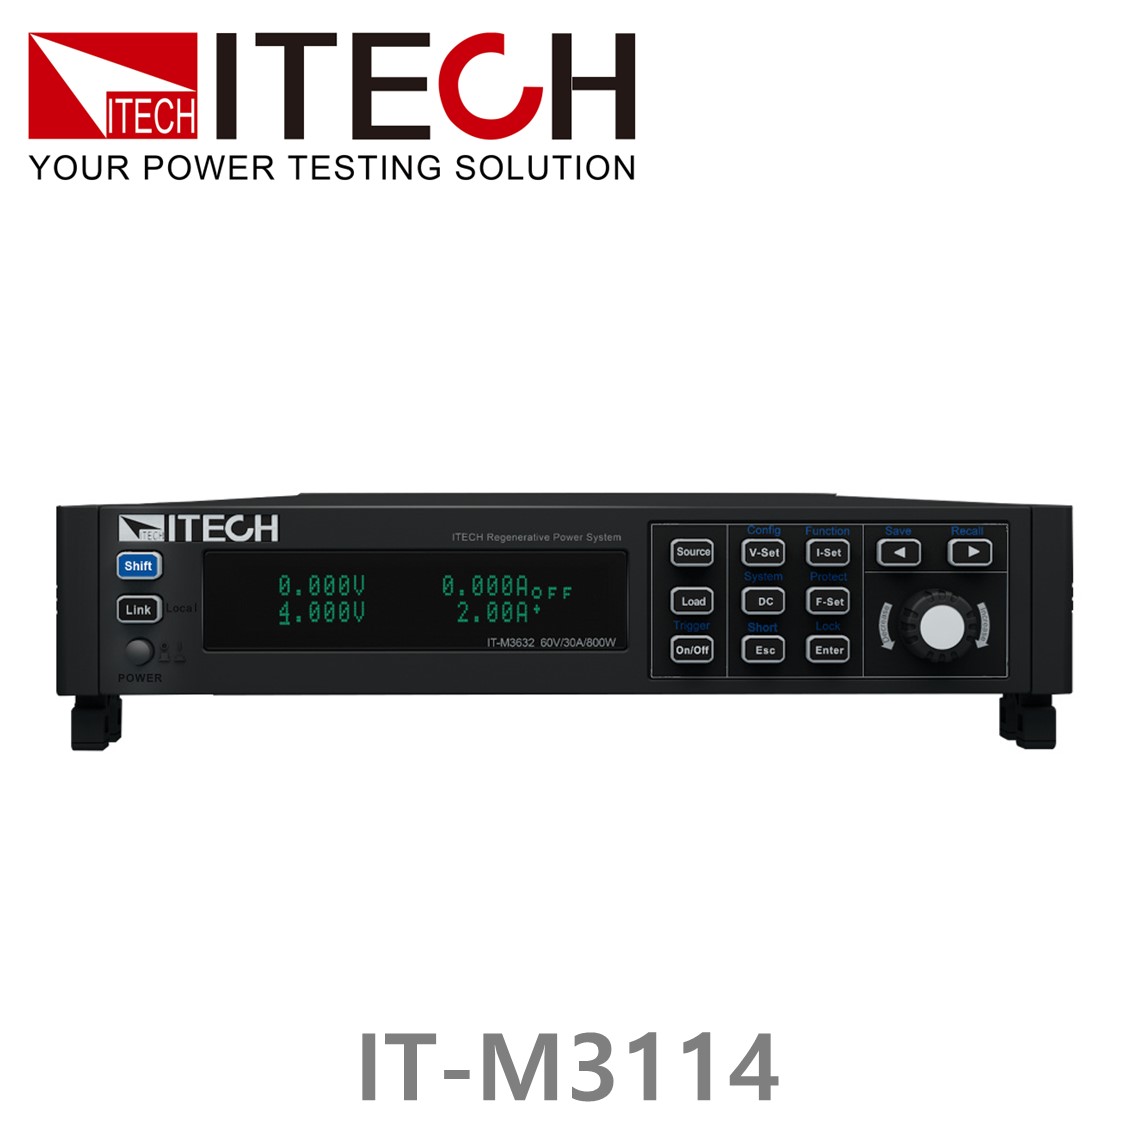 [ ITECH ] IT-M3114 초소형 광대역 DC파워서플라이 (300V/6A/400W), DC전원공급기